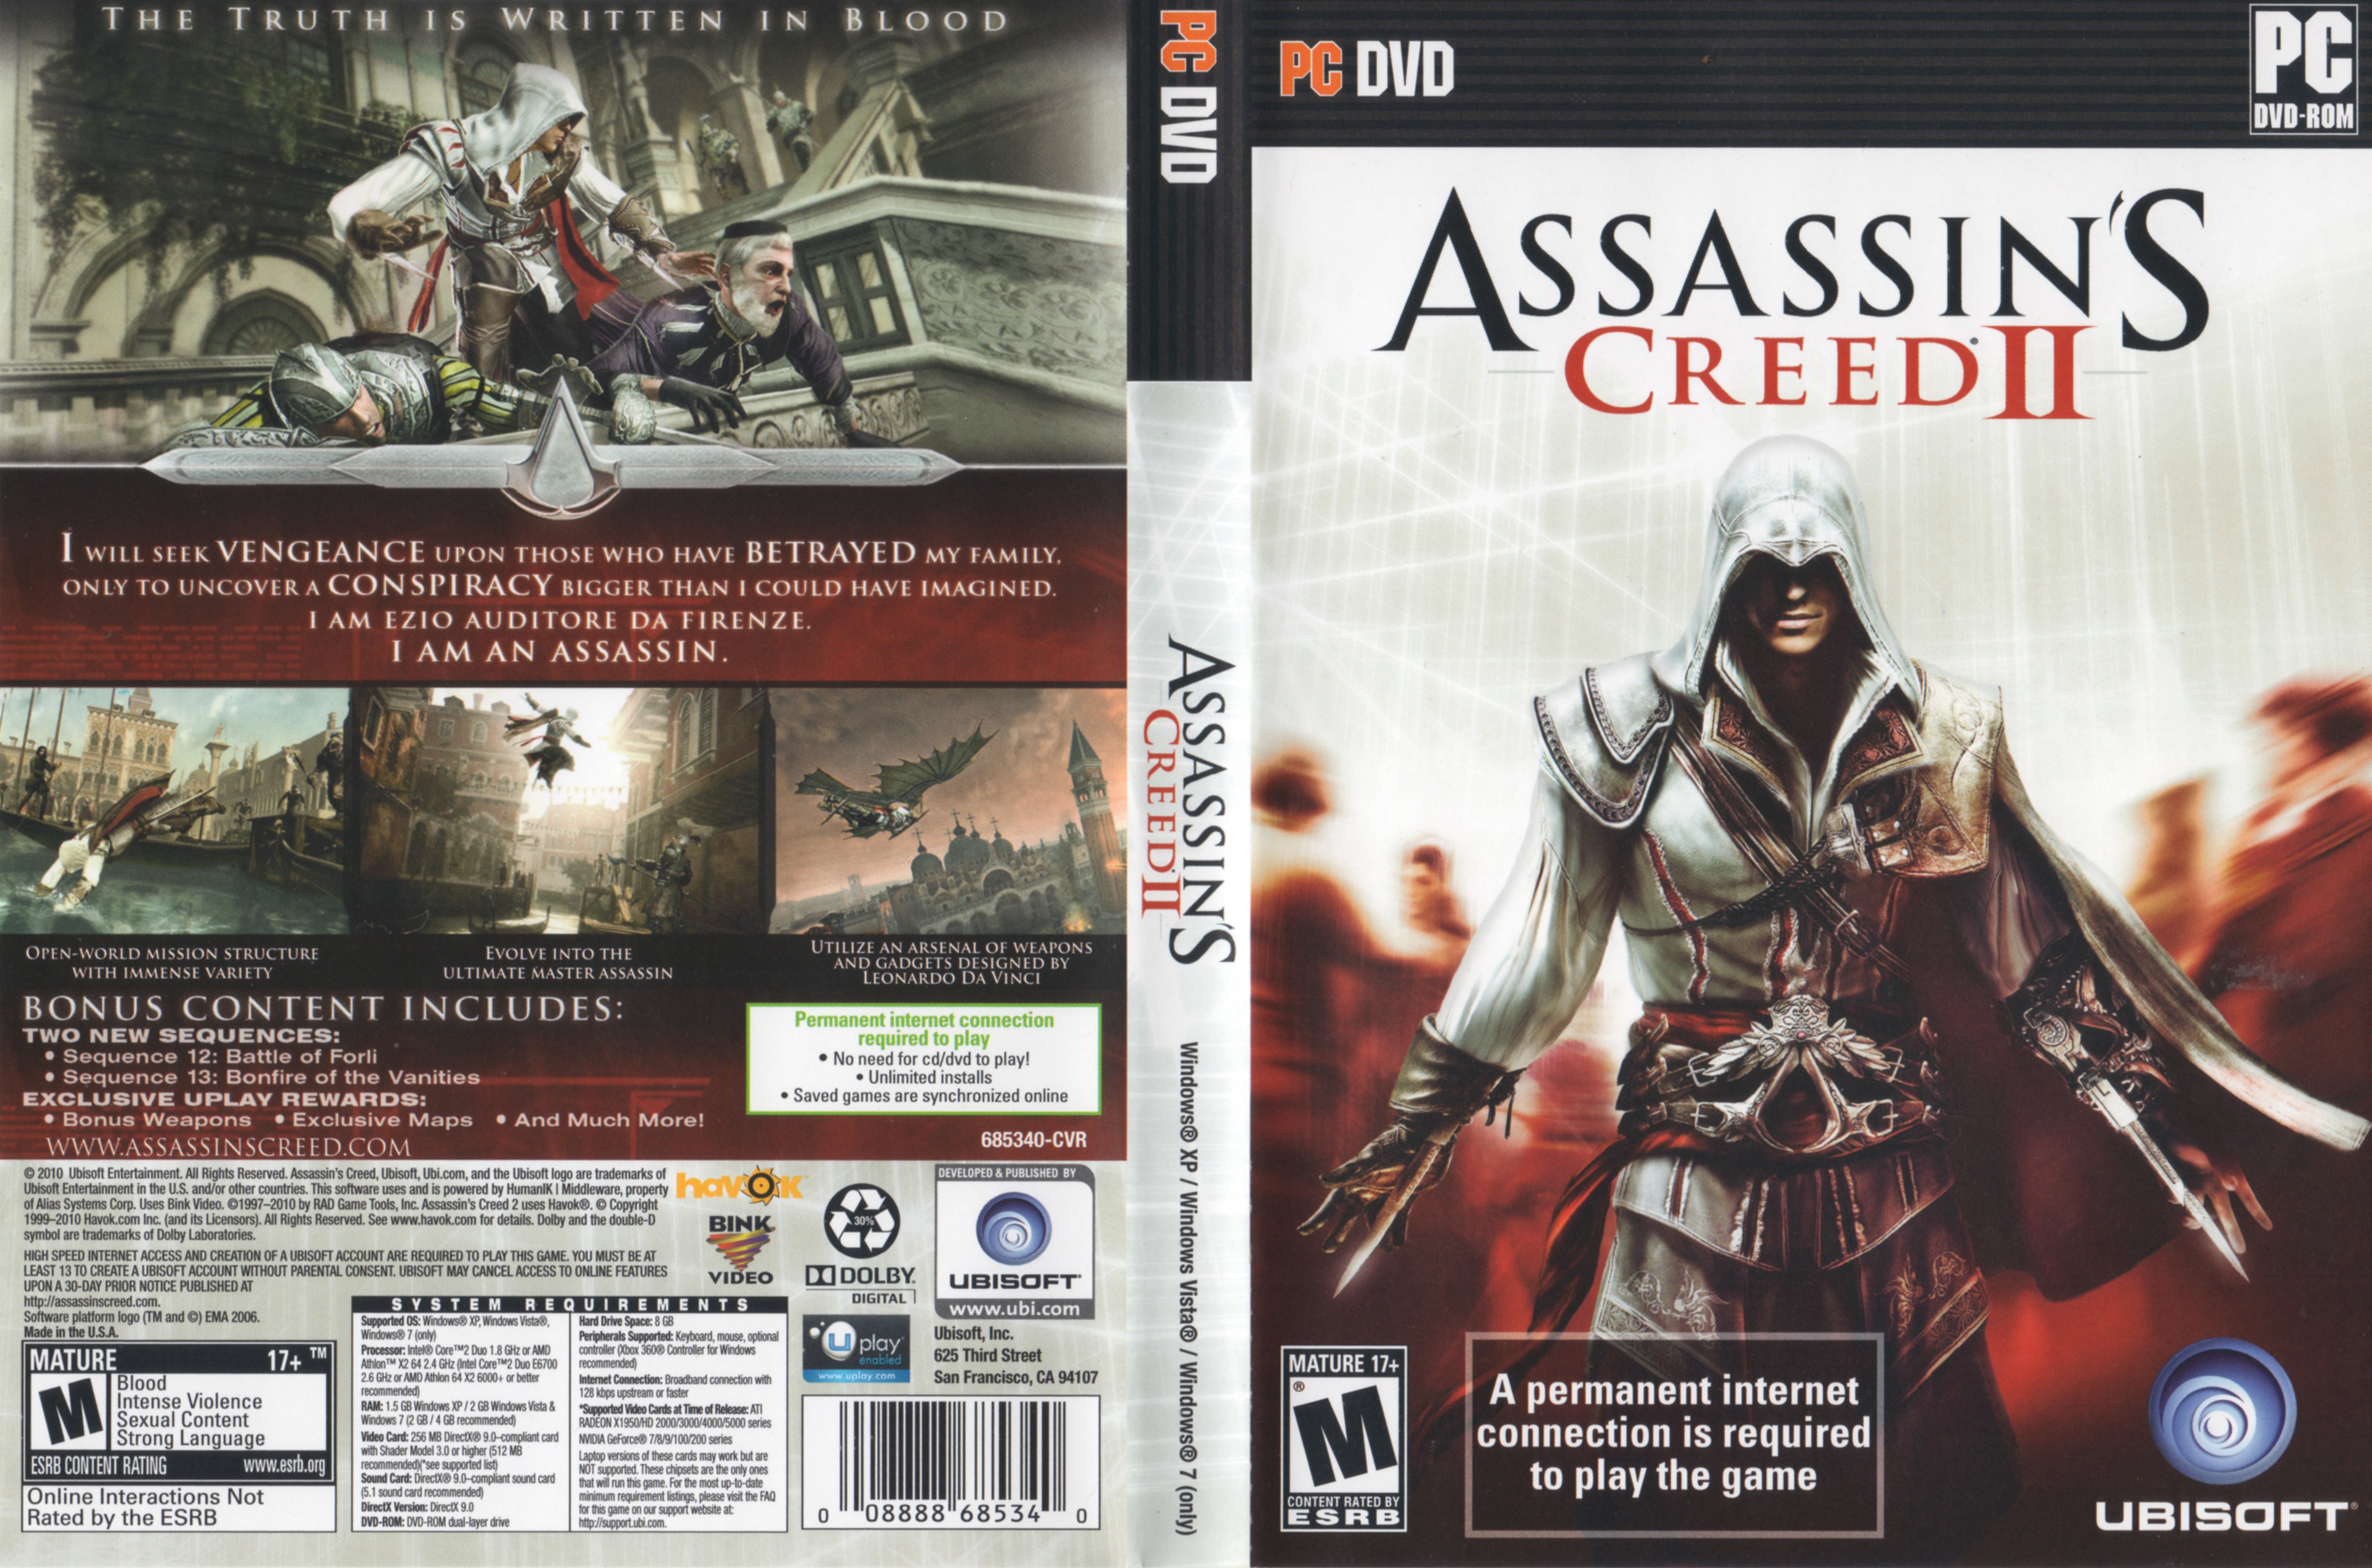 2 pc com. Assassins Creed 2 Xbox 360 обложка. Диск ассасин Крид 2 ps3. Assassins Creed 2 диск. Assassin's Creed 2 DVD PC.